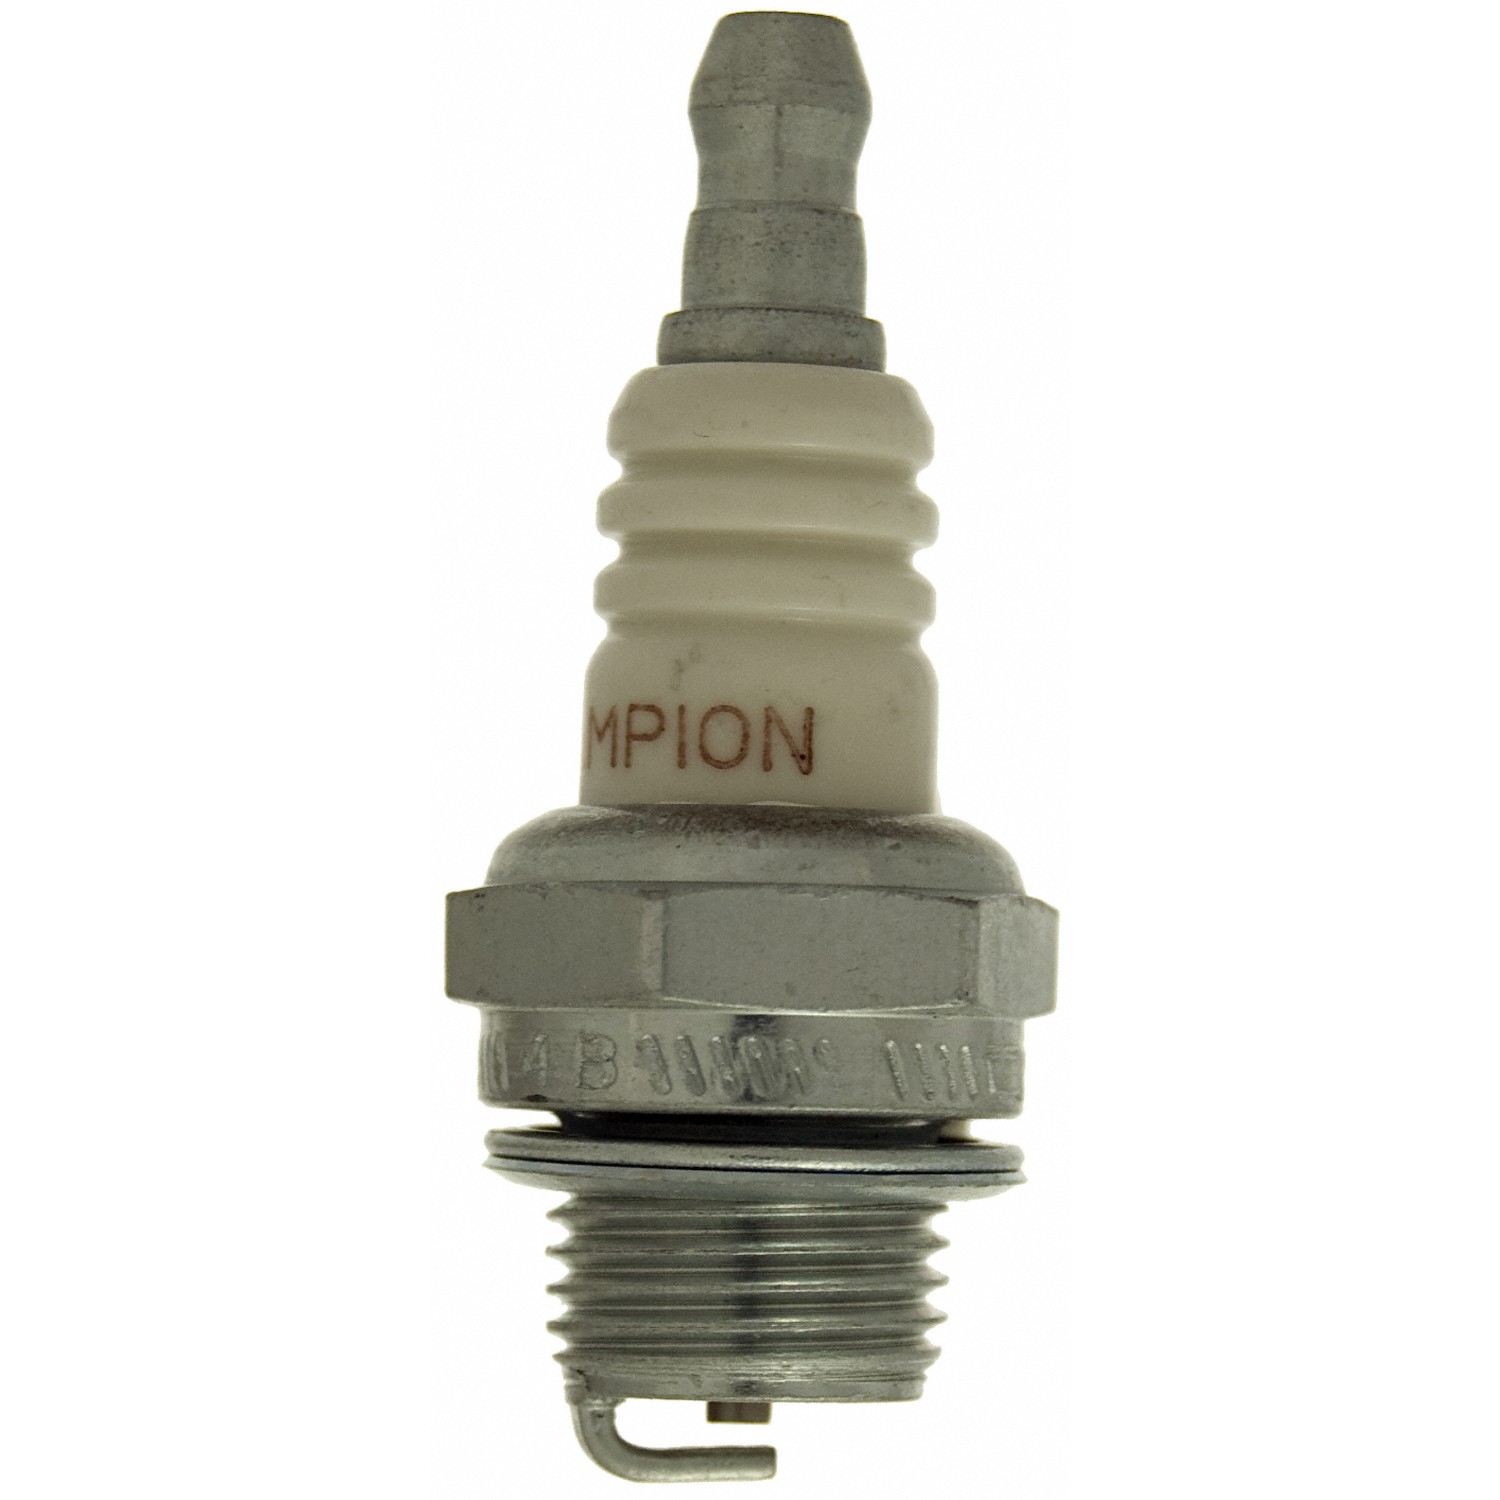 Champion Copper Plus SME Spark Plug - RCJ4 - image 1 of 2